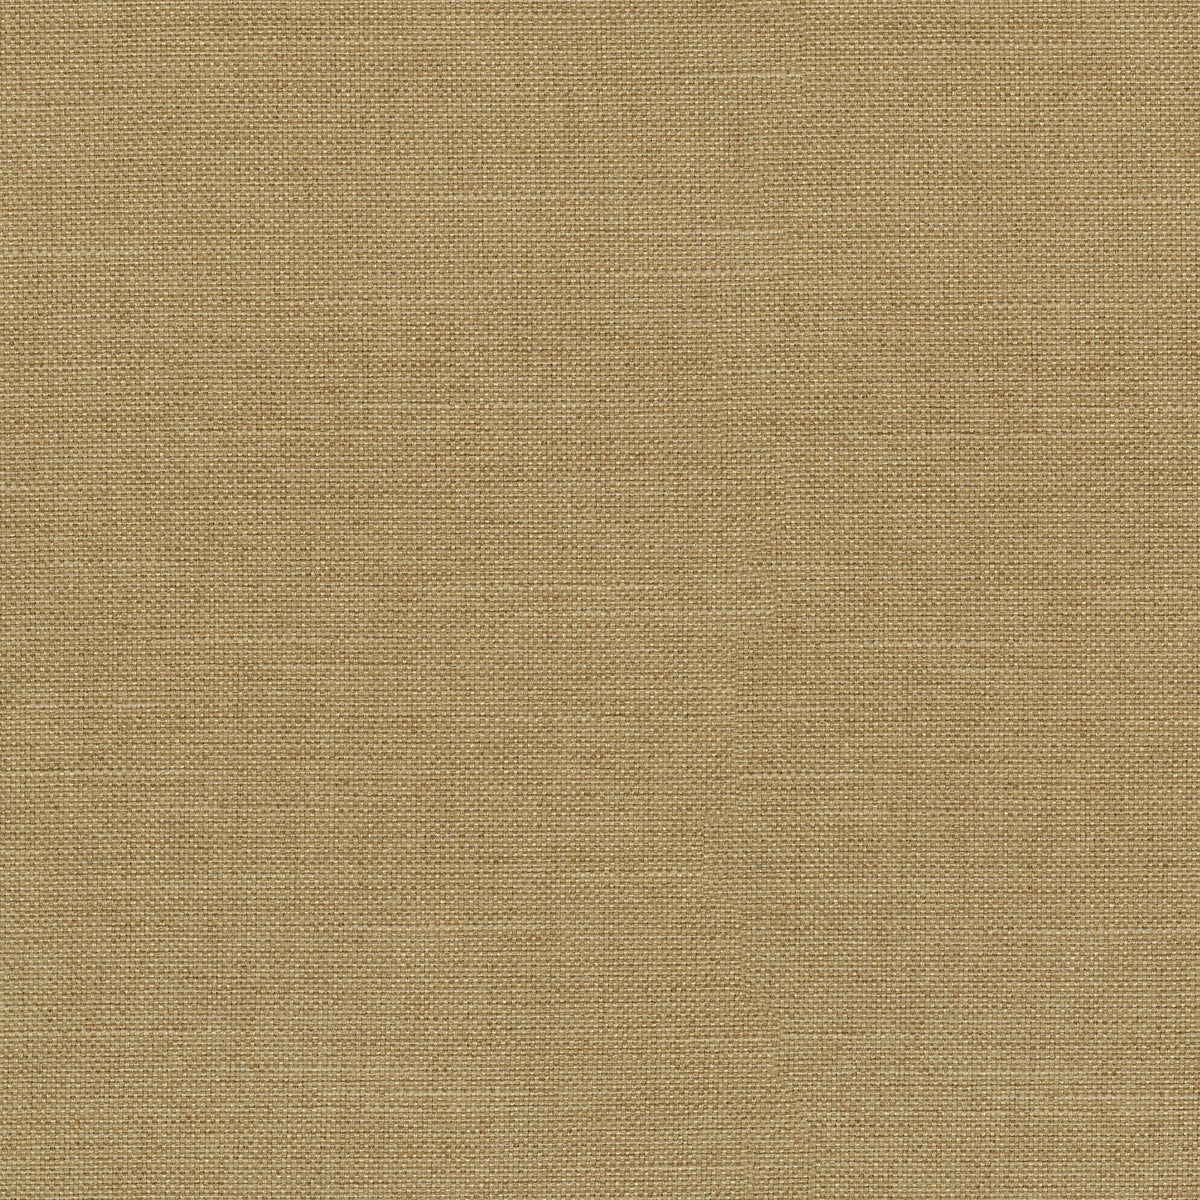 P/K Lifestyles Reba - Goldenrod 409122 Upholstery Fabric